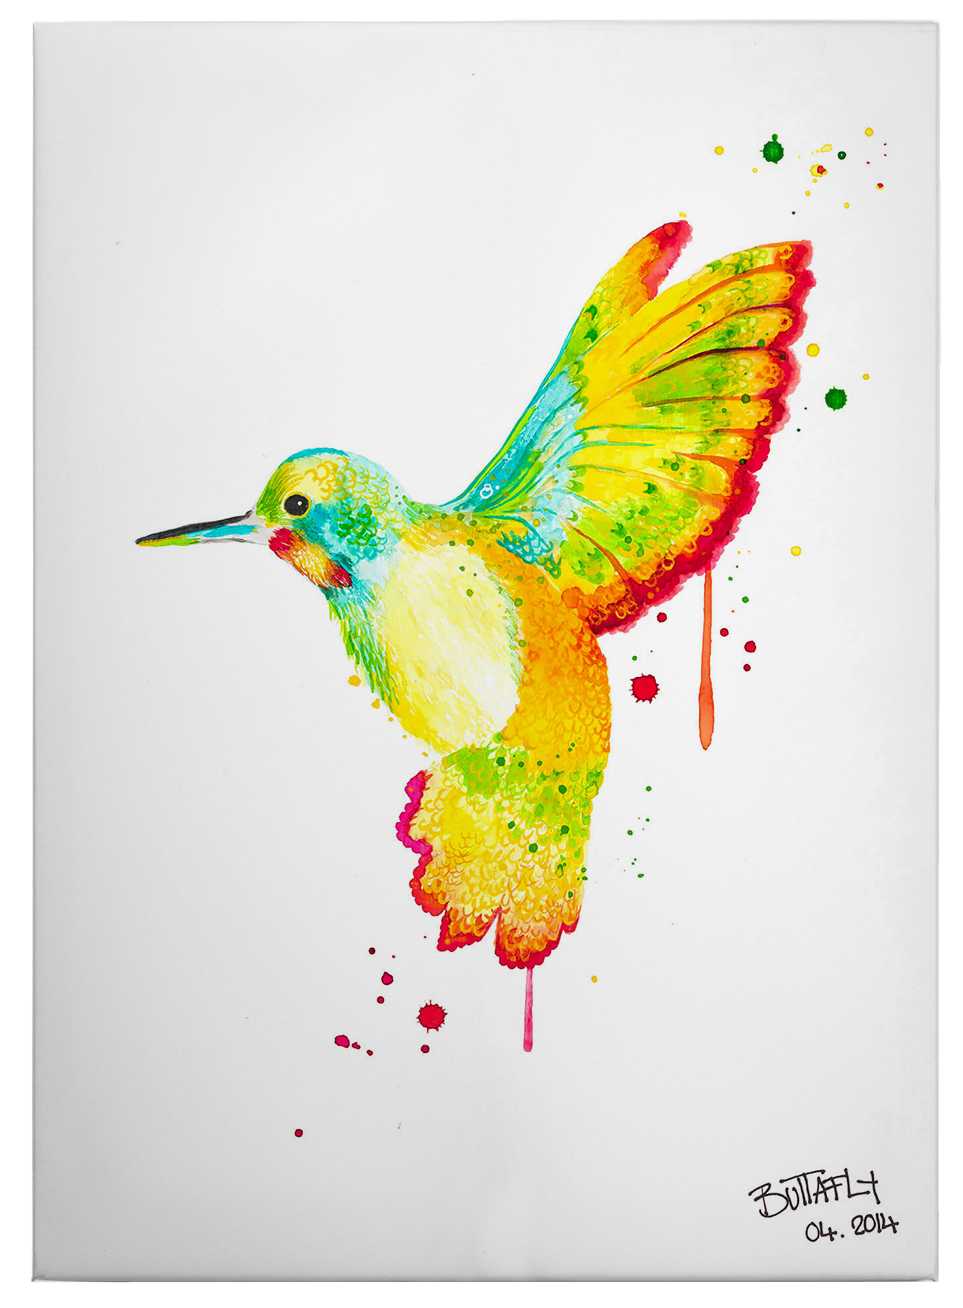             Humingbird by Buttafly, canvas print met kleurrijke kolibrie - 0.50 m x 0.70 m
        